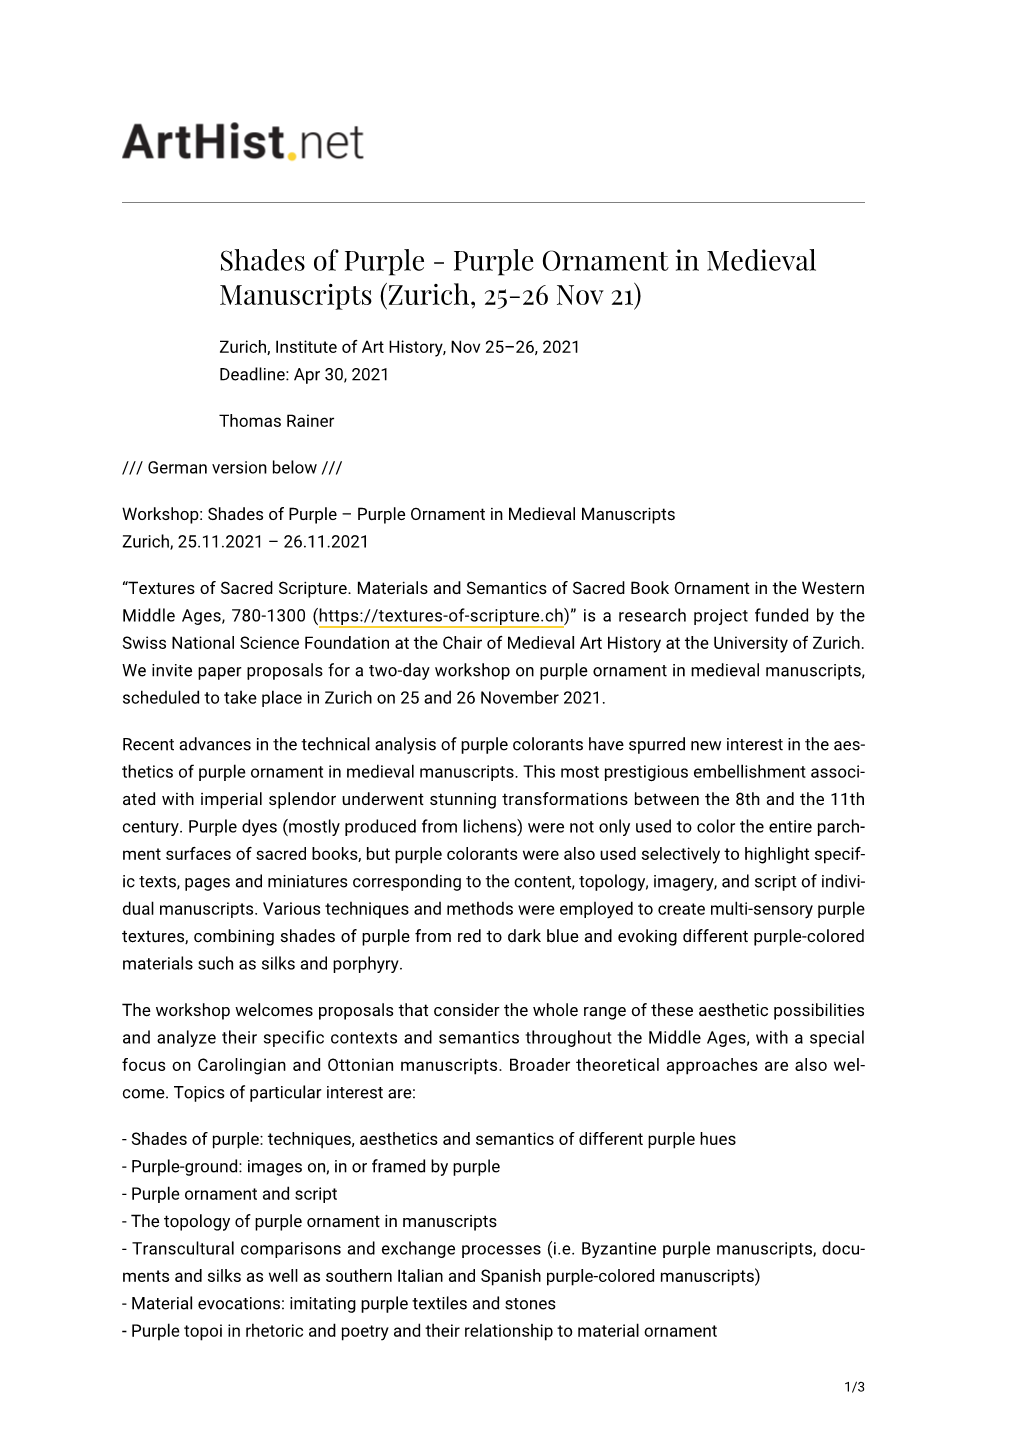 Shades of Purple - Purple Ornament in Medieval Manuscripts (Zurich, 25-26 Nov 21)